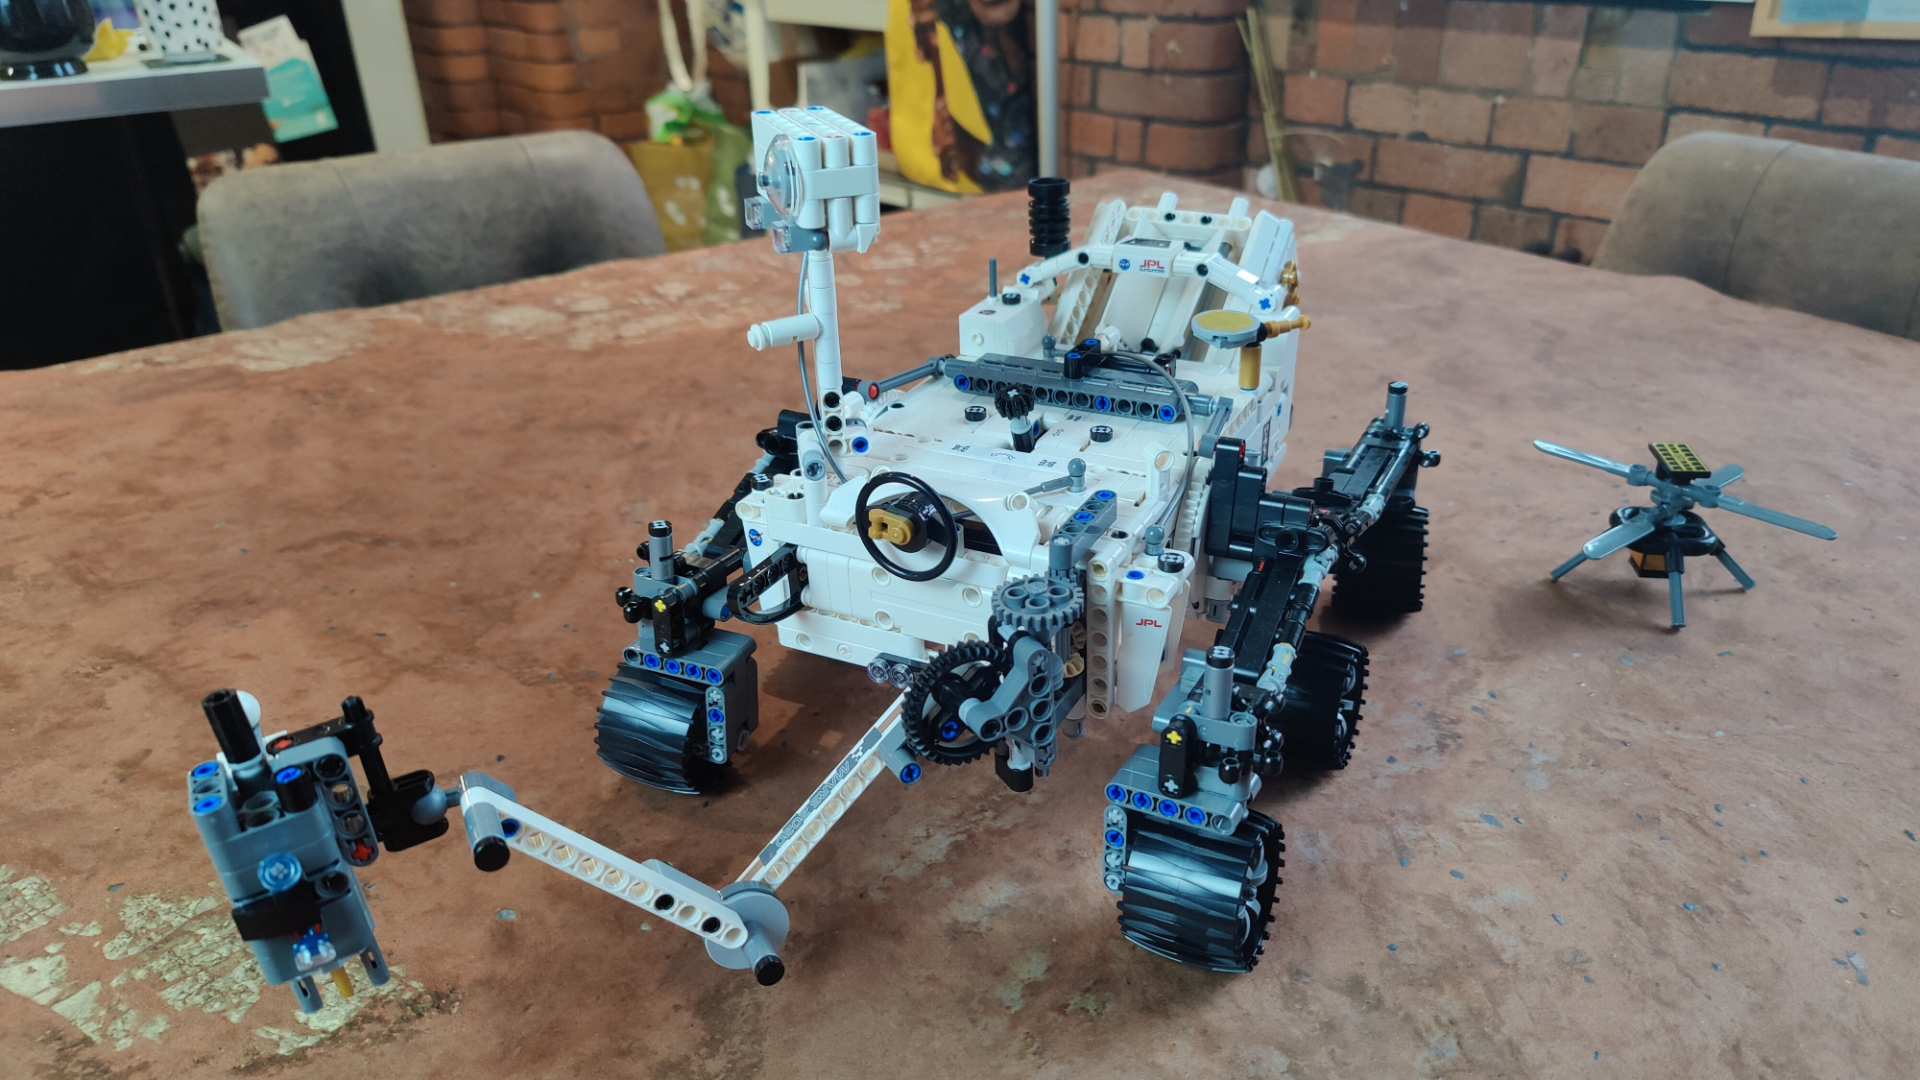 Close up photo of the Lego NASA Mars Rover Perseverance.